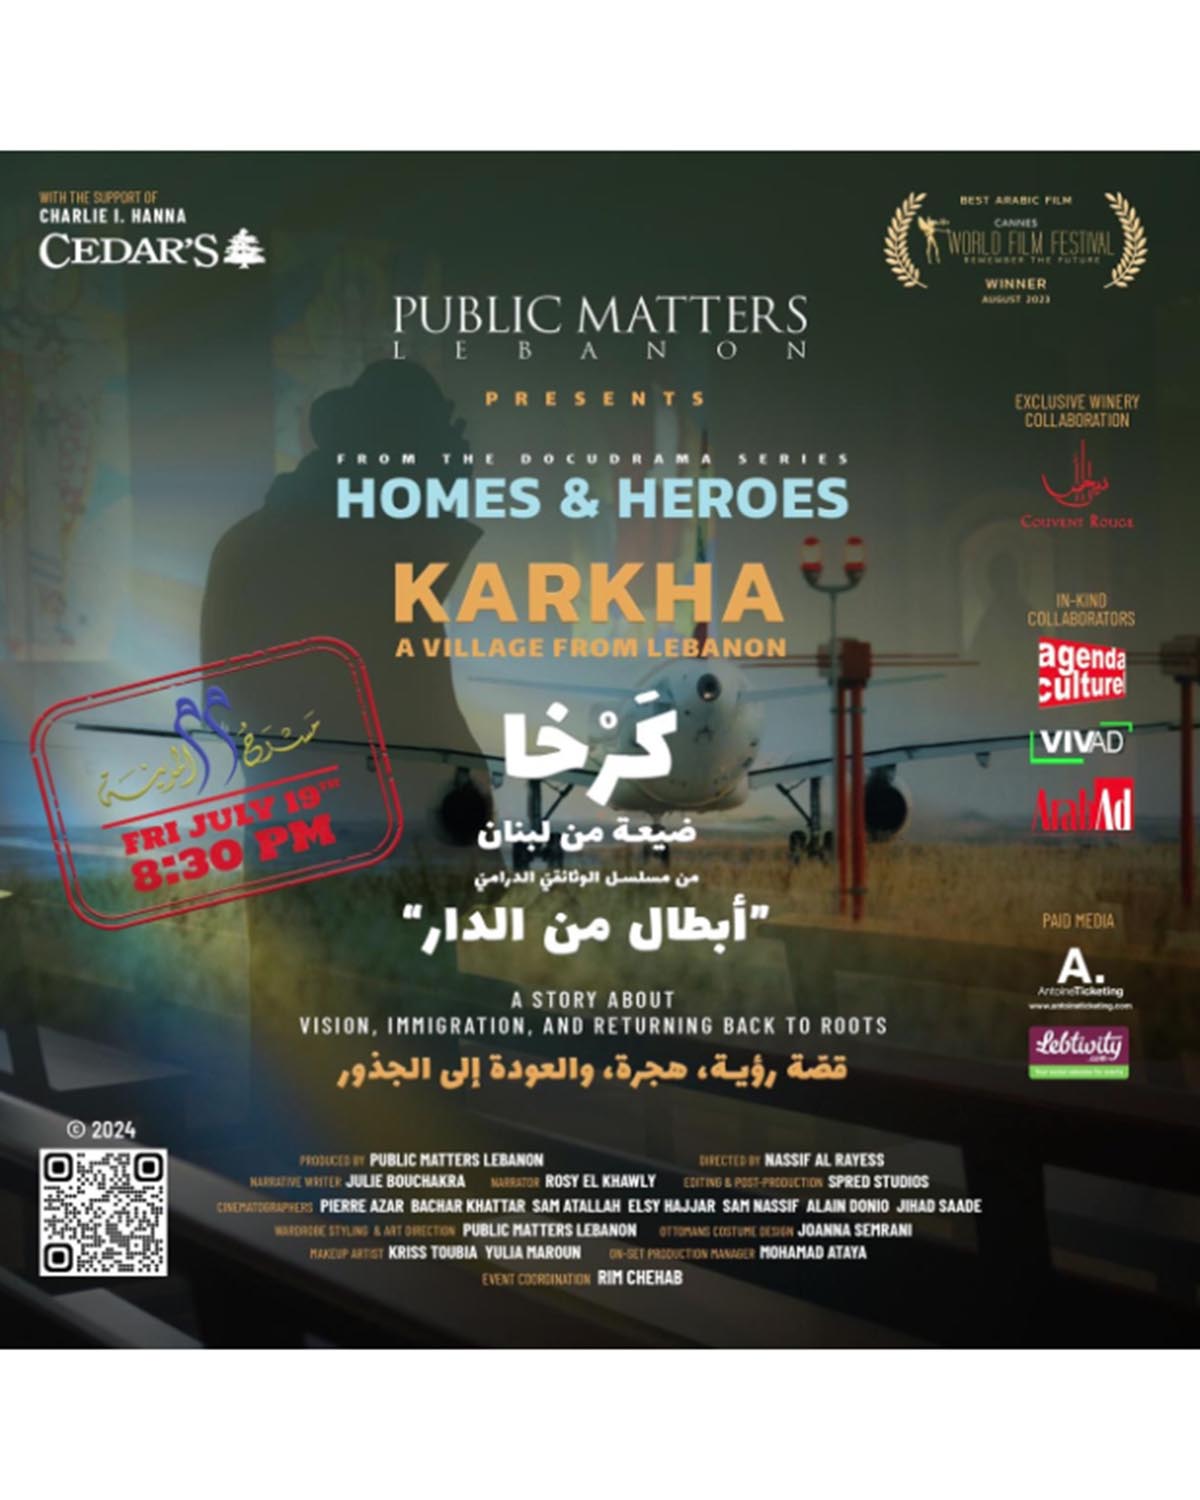 An exclusive screening of award-winning docu-drama ‘Karkha: A Village From Lebanon’ hosted by Public Matters Lebanon